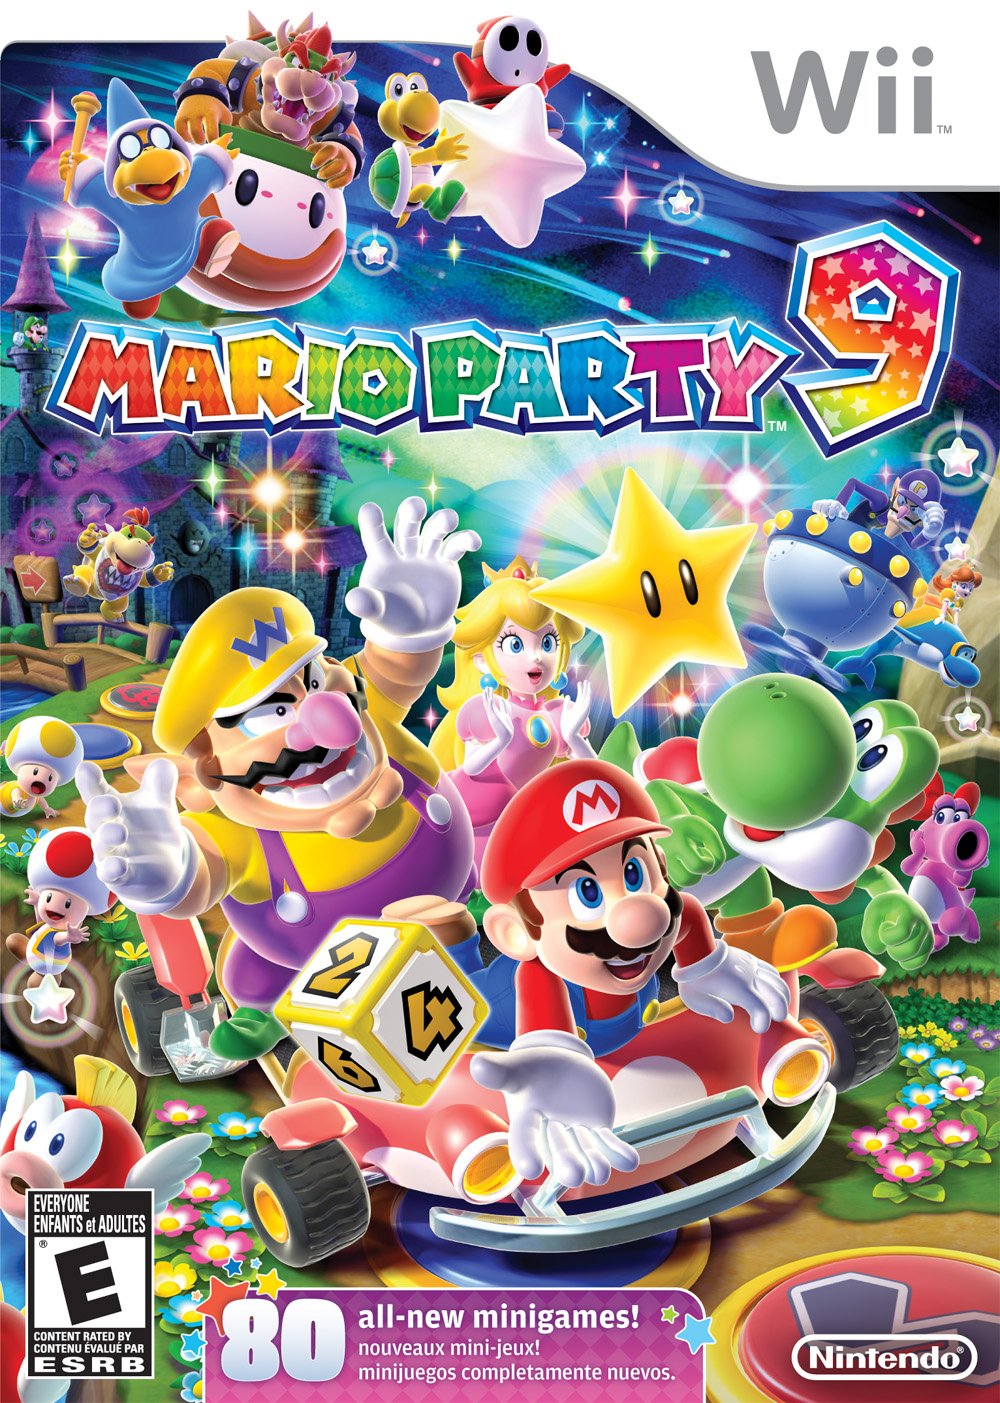 Mario Party 9 Super Wiki, Mario encyclopedia